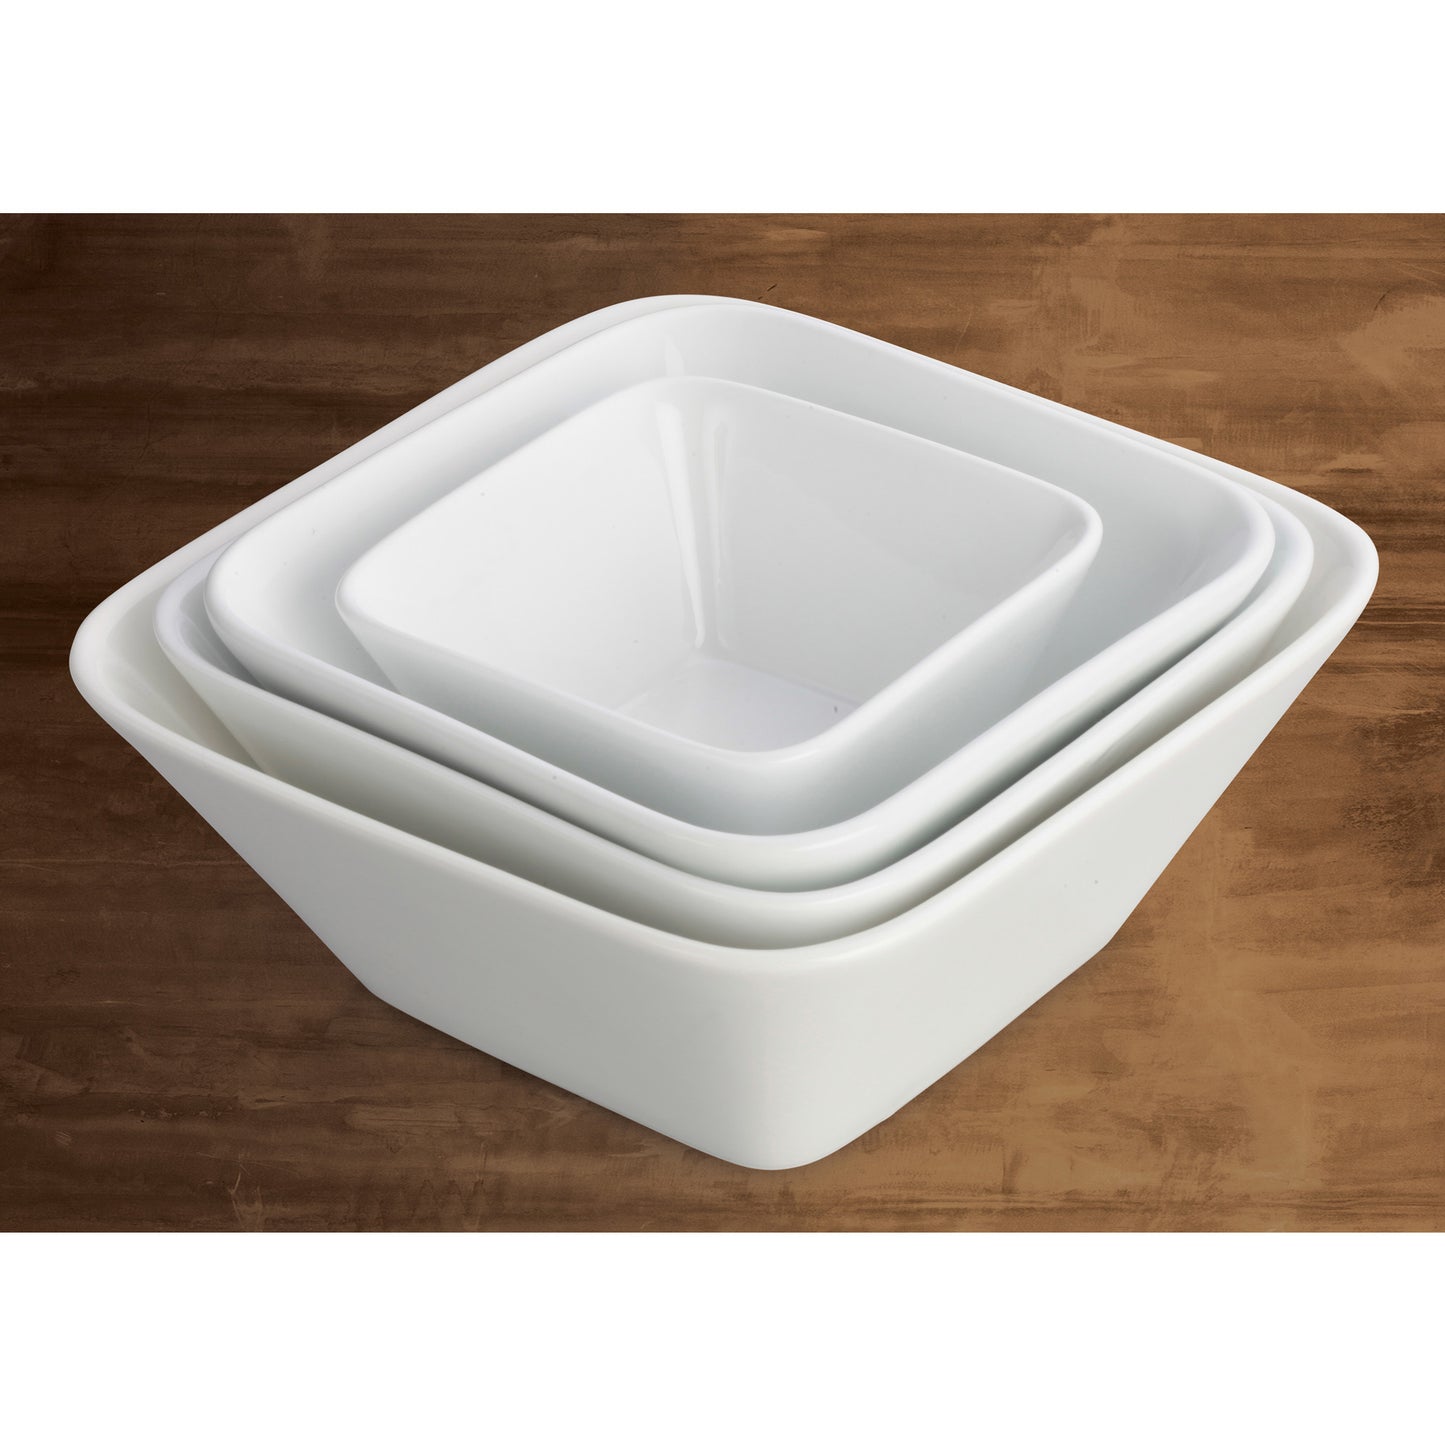 WDP008-102 - 6-1/4"Sq Porcelain Square Bowl, Bright White, 24 pcs/case